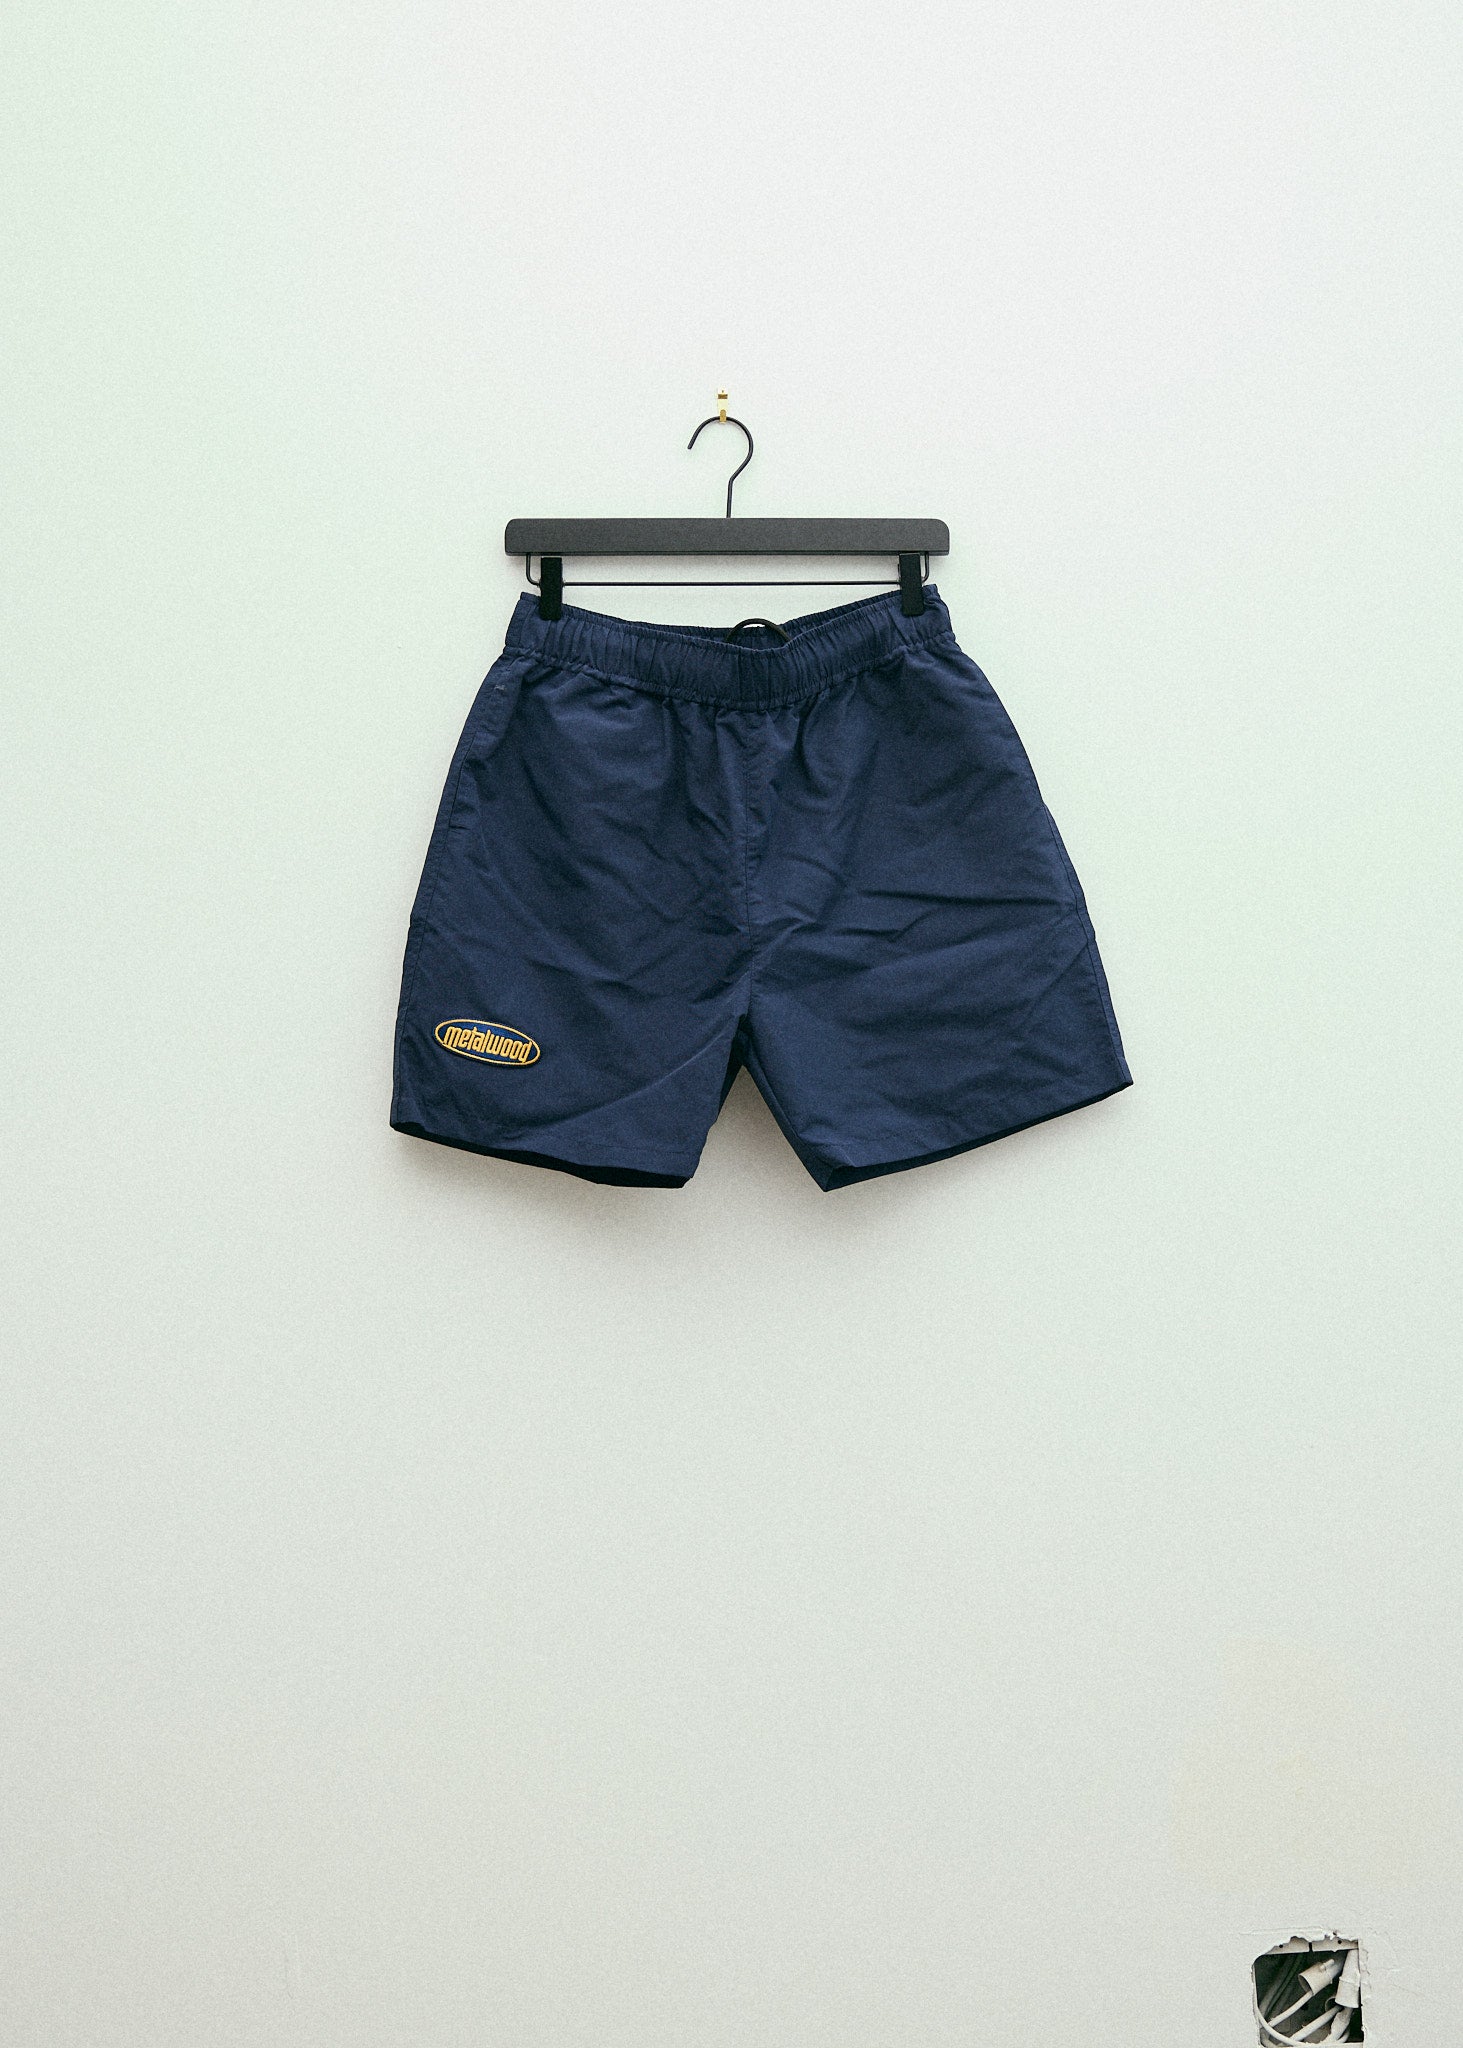 Metalwood Studio - Navy Oval Logo Swim Trunk Shorts